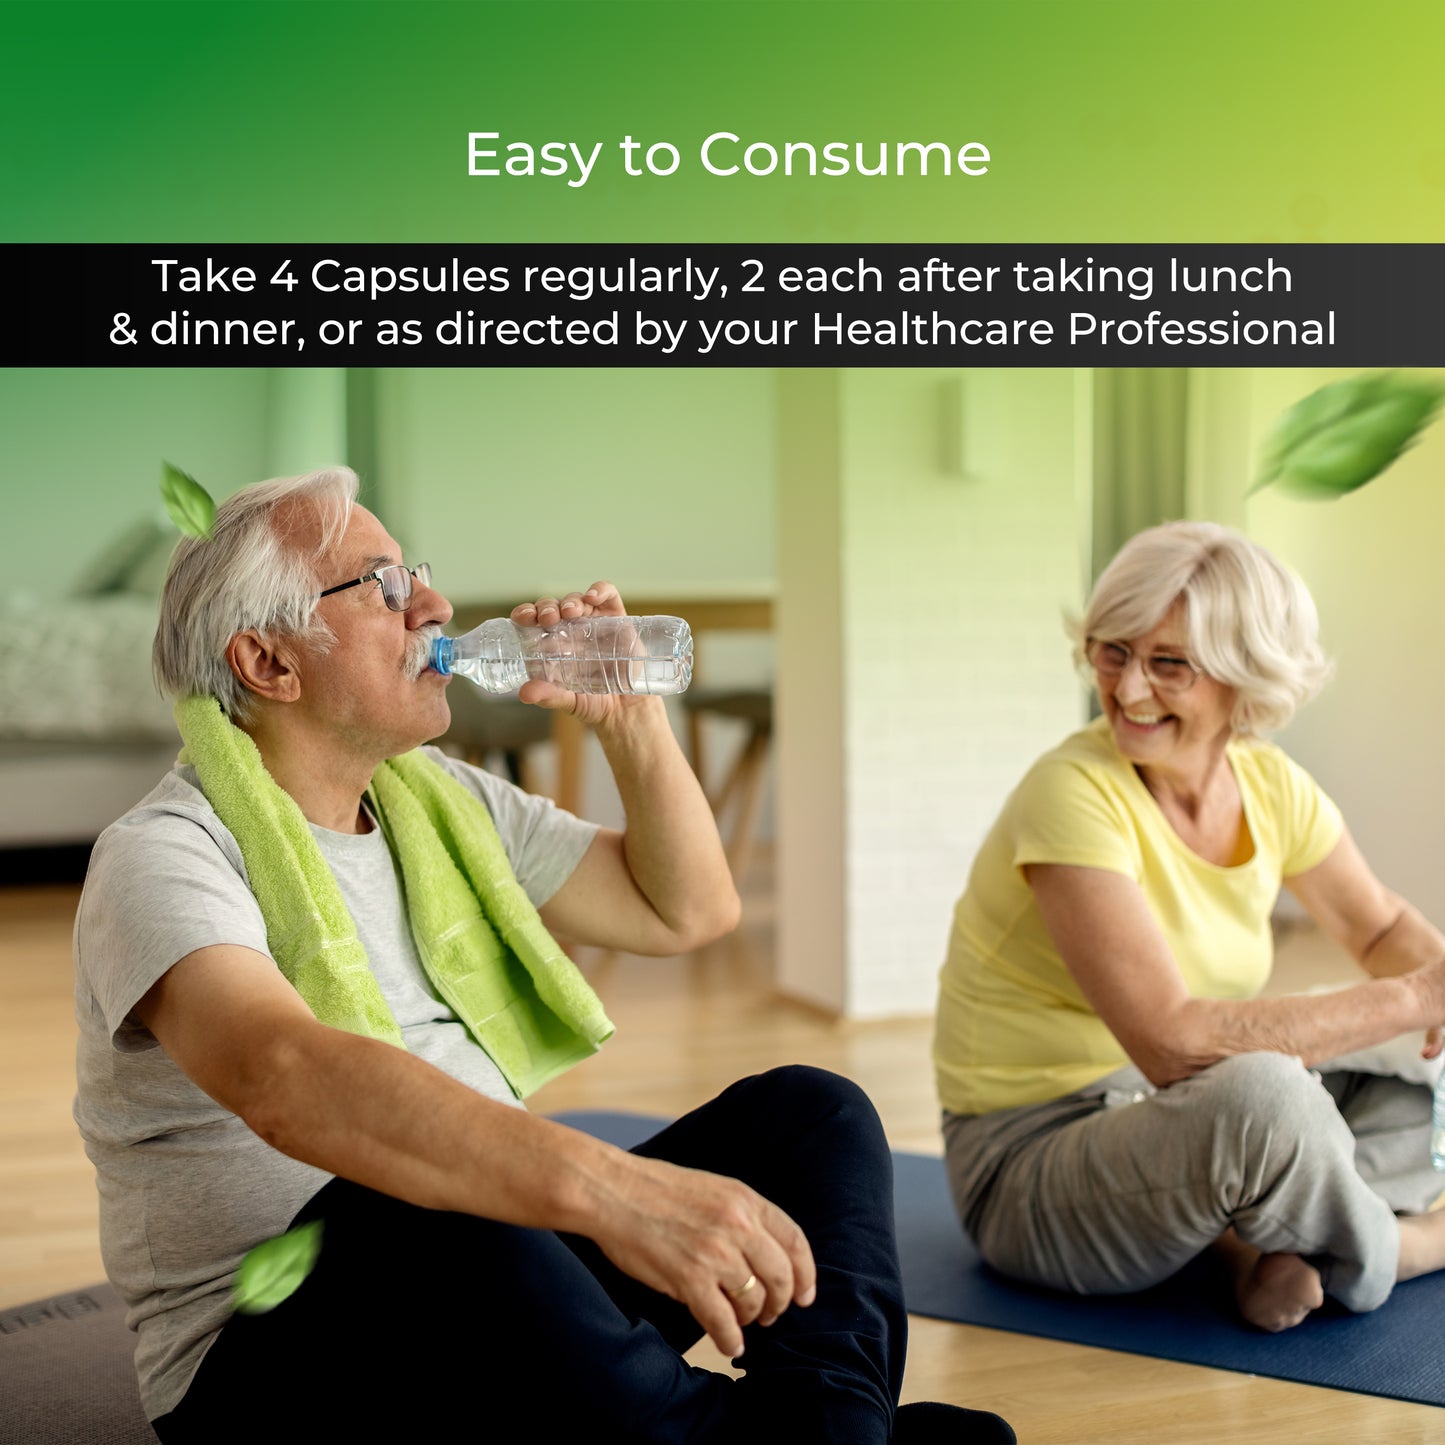 Health Veda Organics Spirulina Capsules 2000mg | Green Food for Good Health Weight Management & Immunity Booster - 120 Vegetarian Capsules